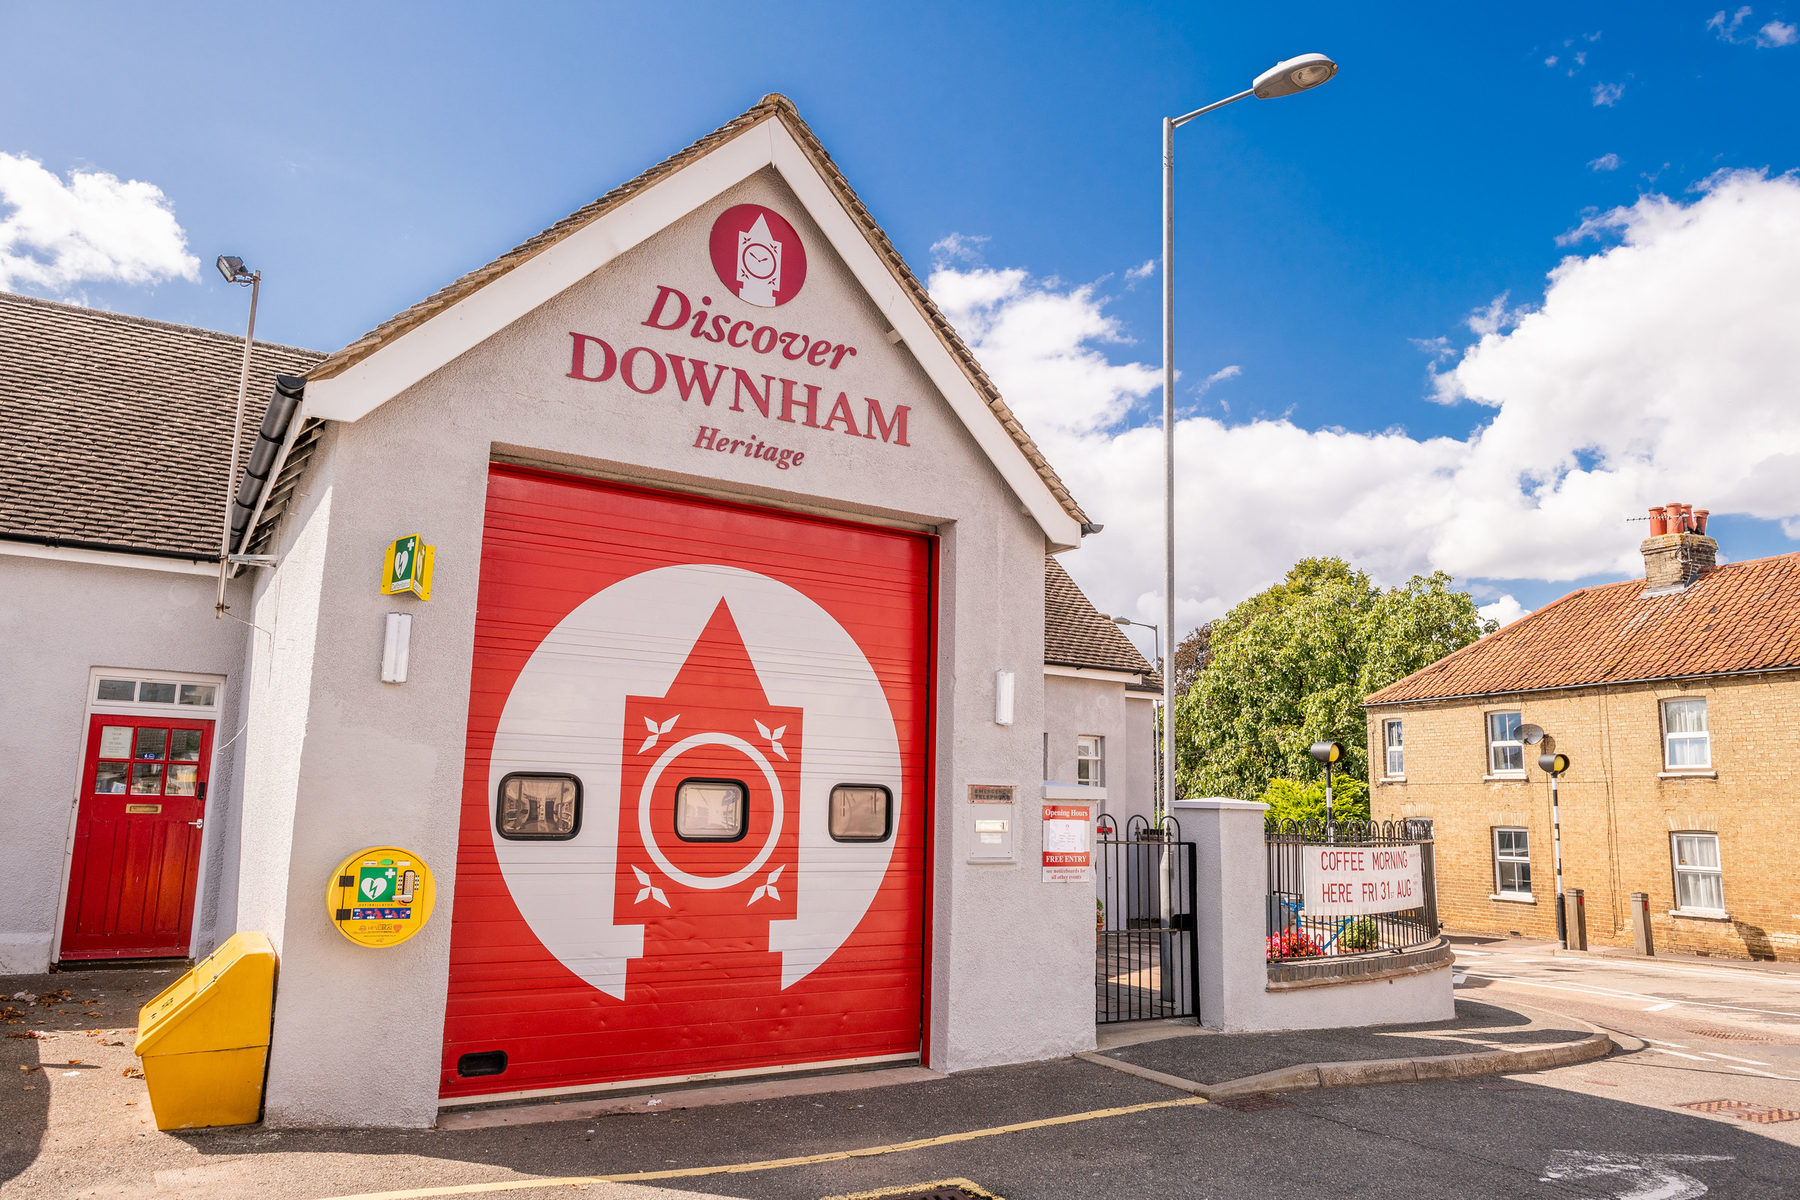 002 Downham Heritage 2018